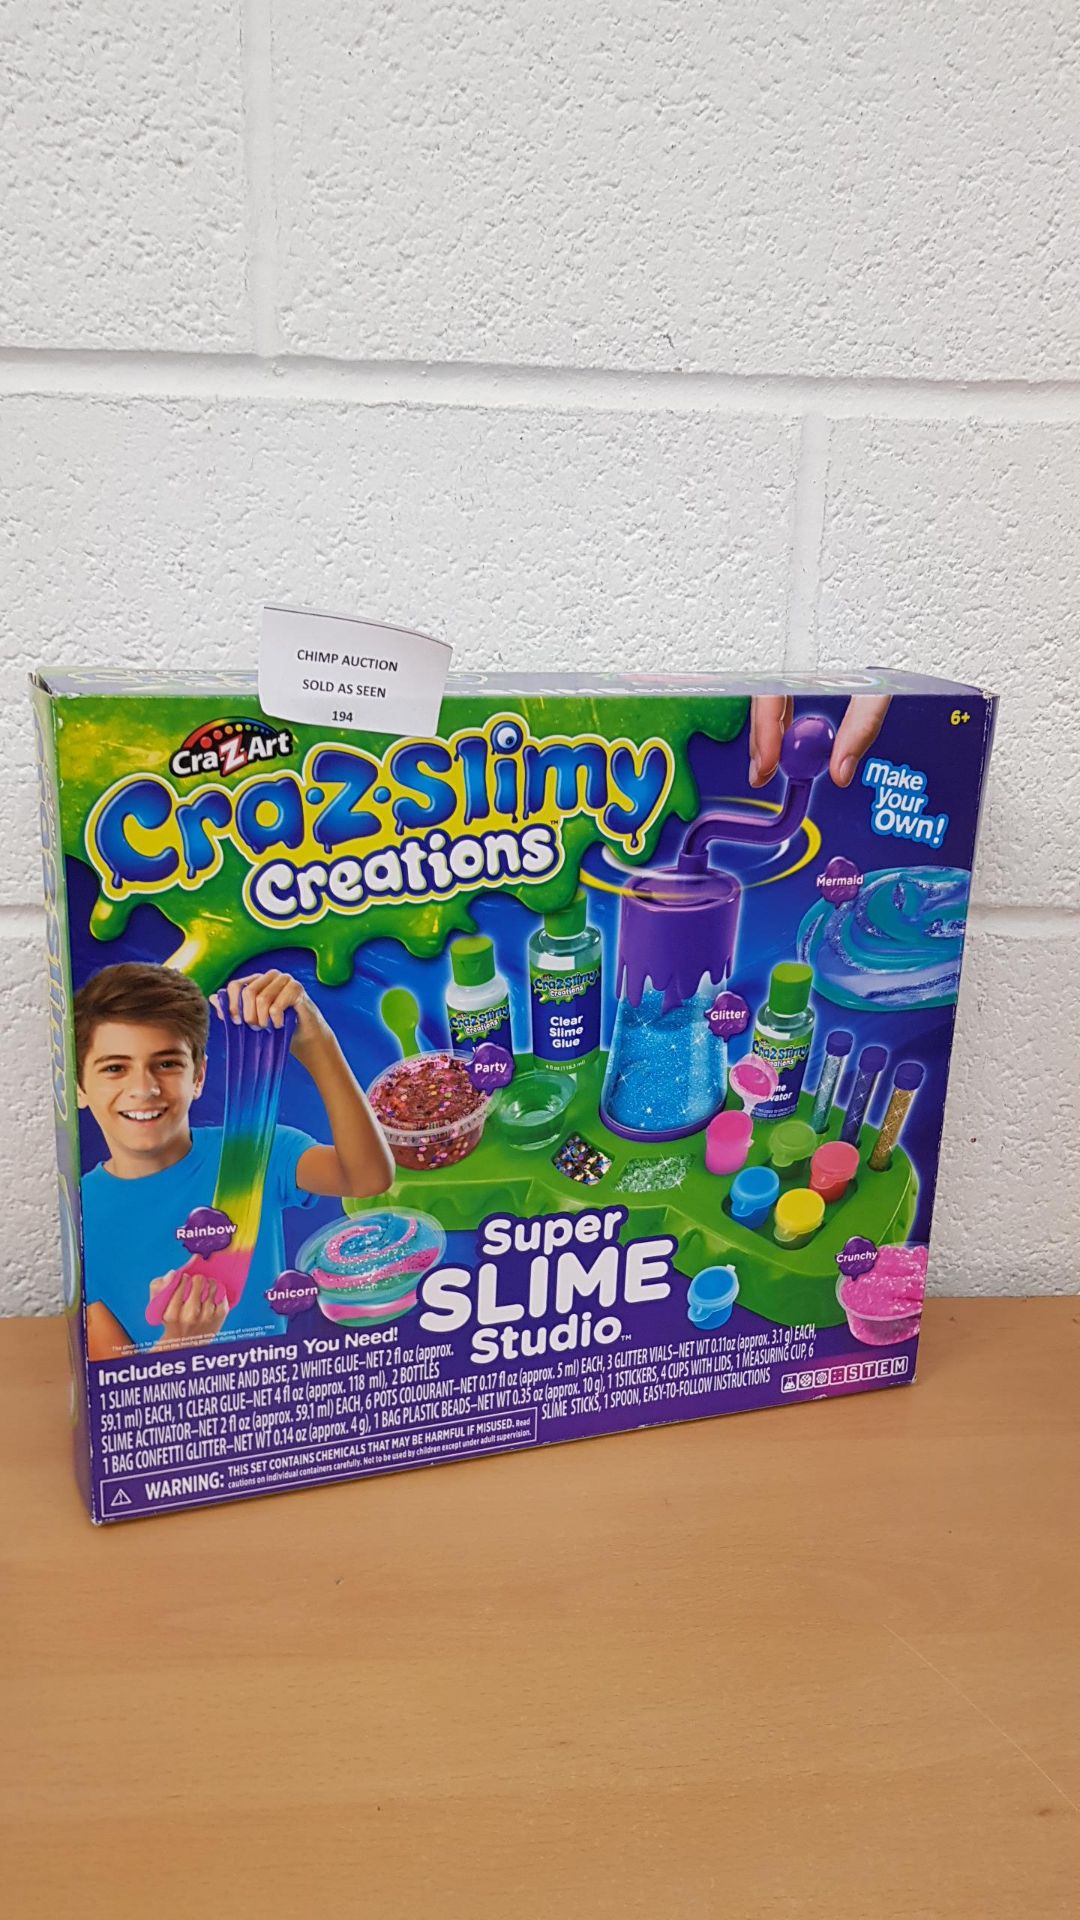 CrazArt Slime creations super Slime Studio